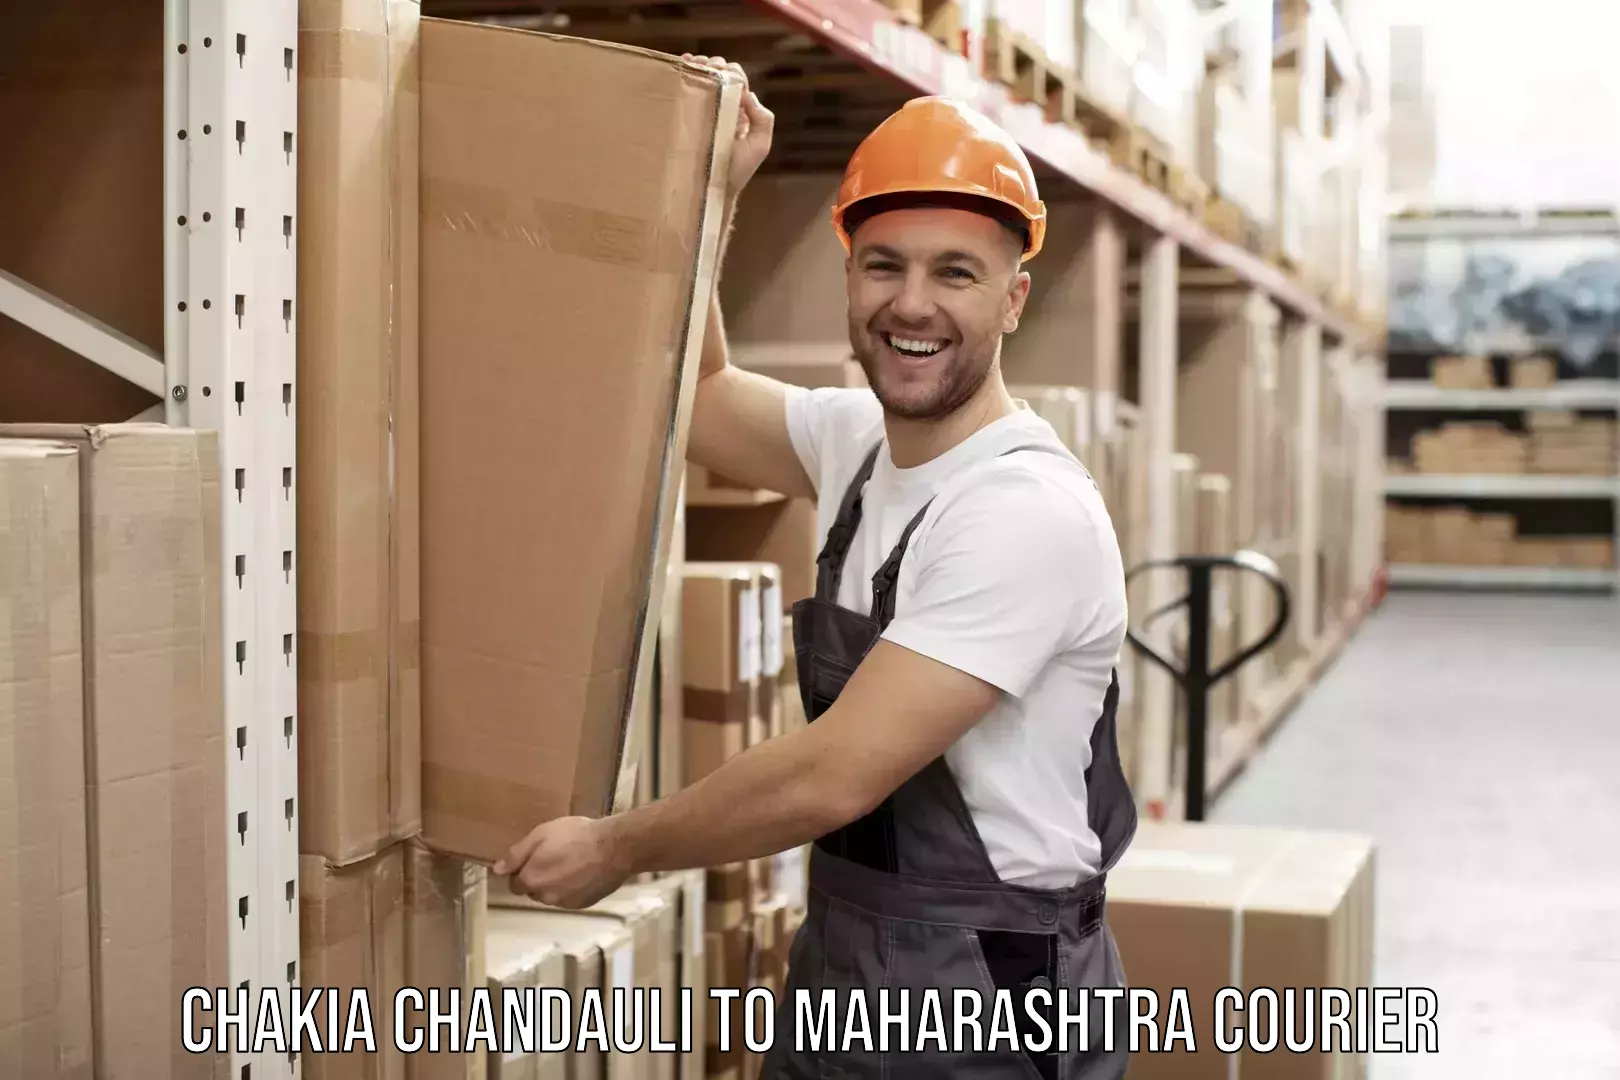 Professional moving company Chakia Chandauli to Dharmabad